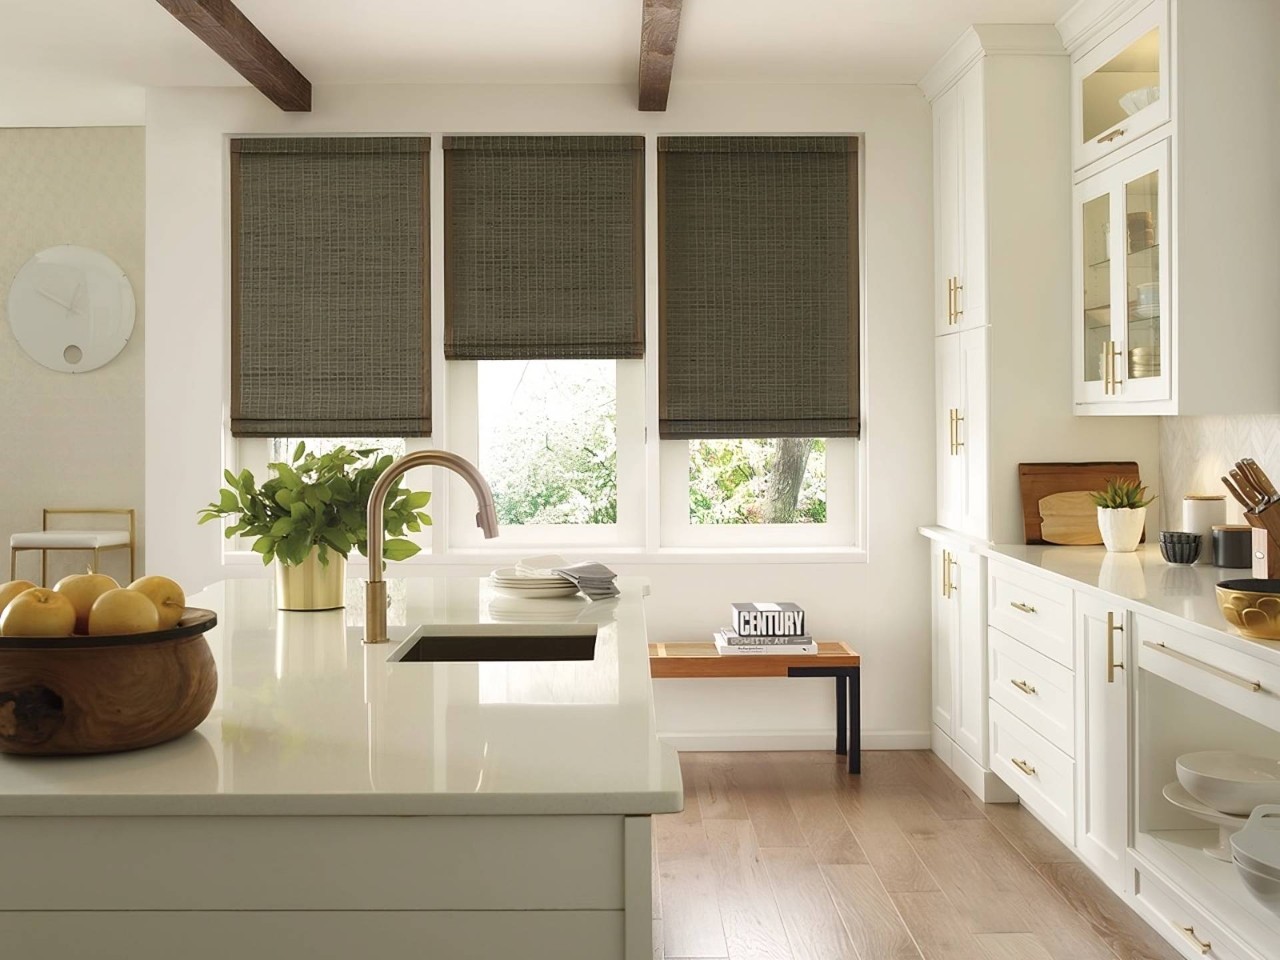 Hunter Douglas Provenance® Woven Wood Shades decorating three windows in a home kitchen near Concord, CA